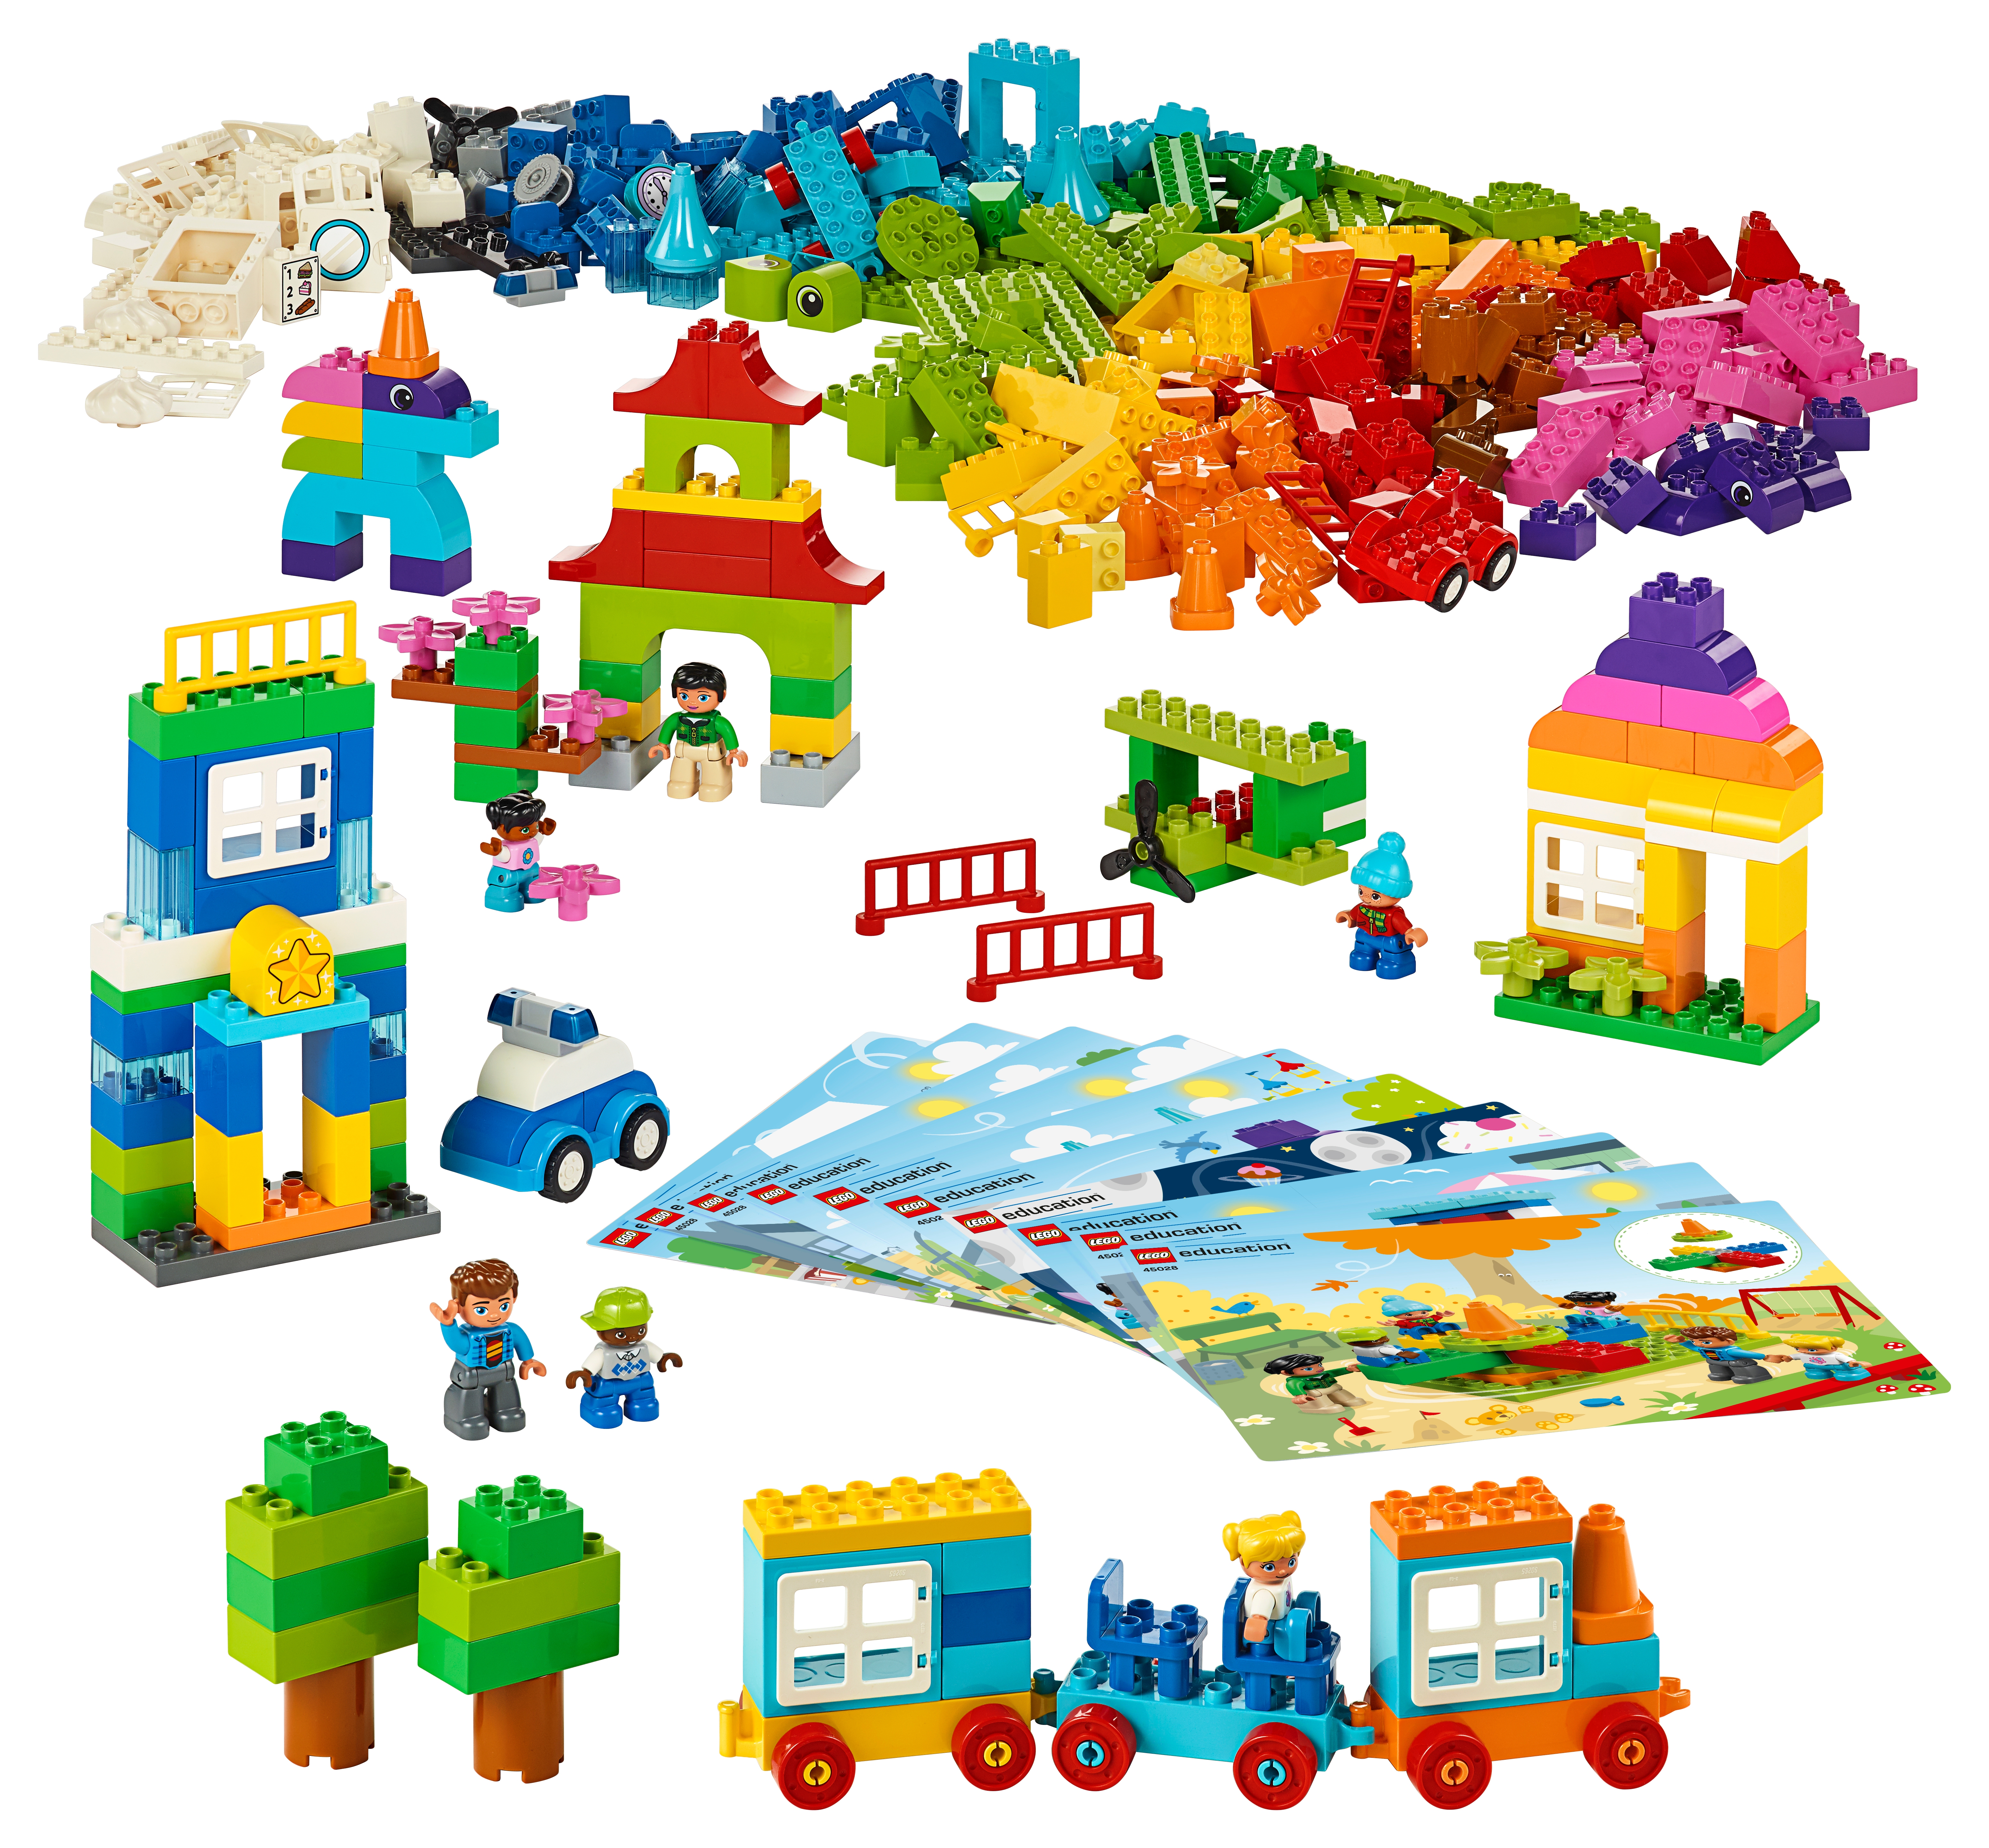 LEGO Education 45028 - Mój świat XL